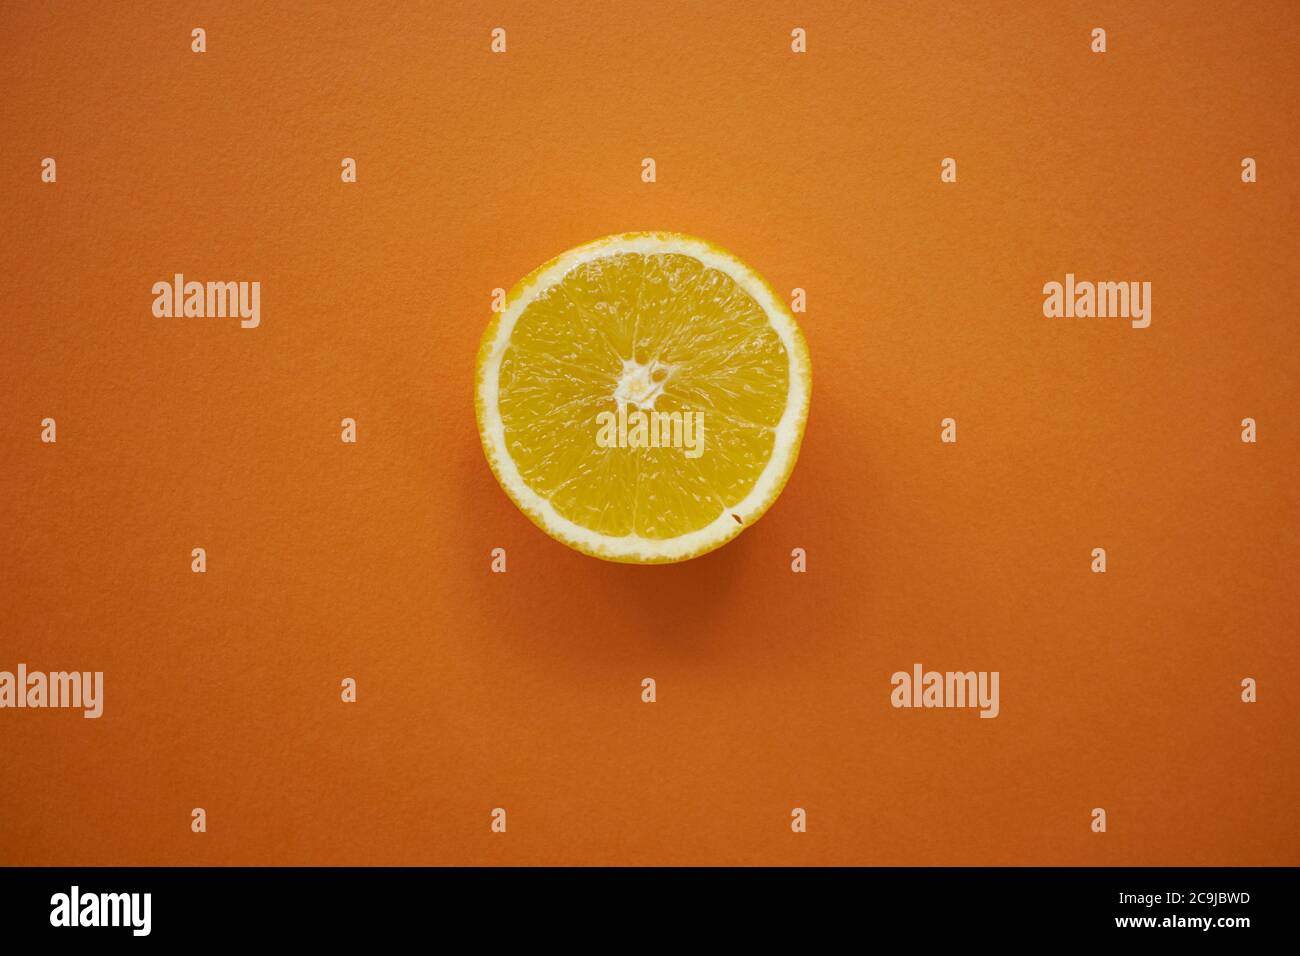 Lemon half against an orange background. Stock Photo